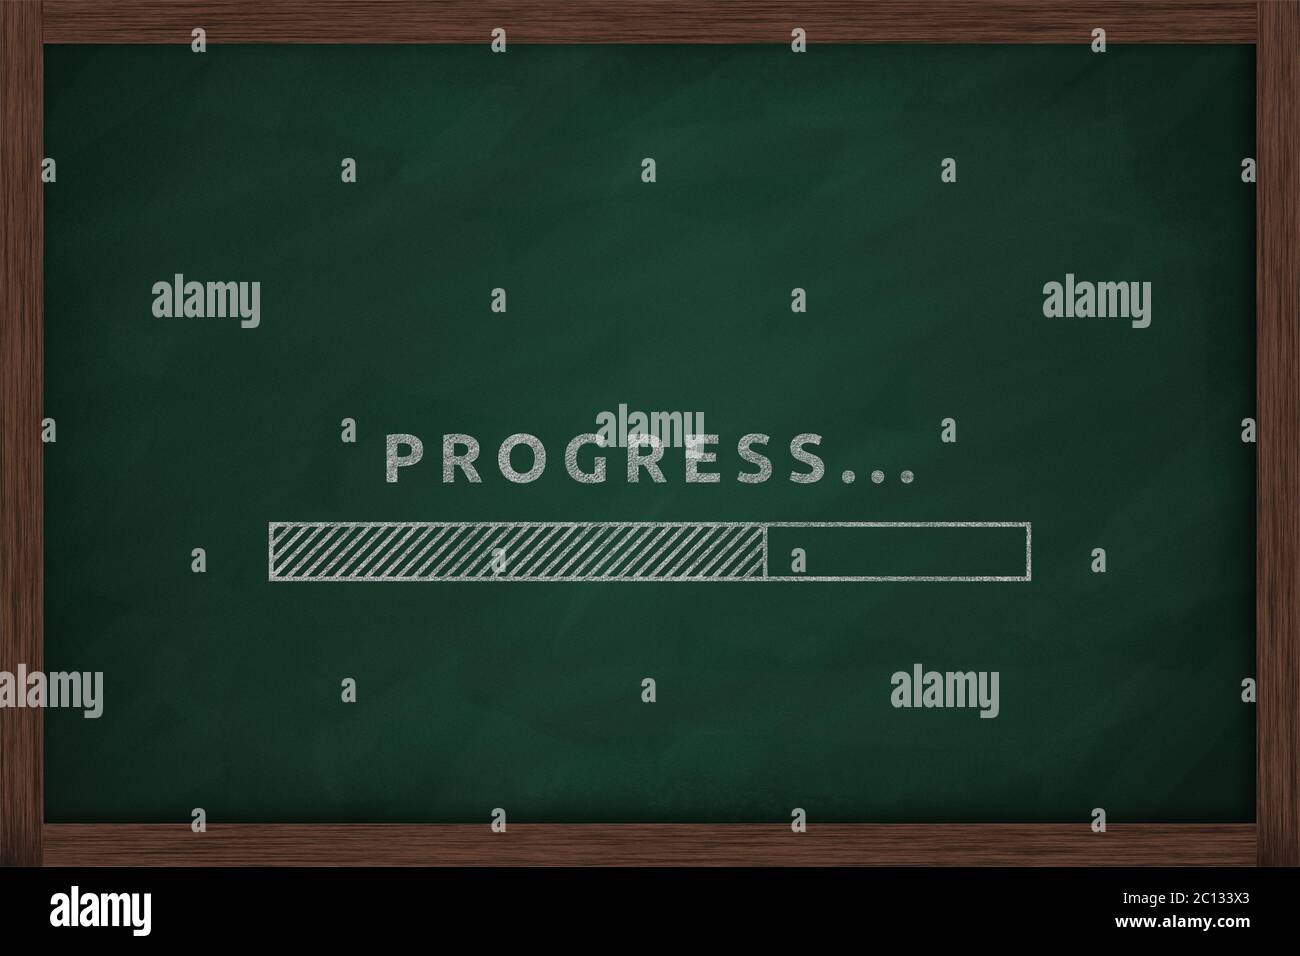 Progress writed on a blackboard and drawing progress bar Stock Photo